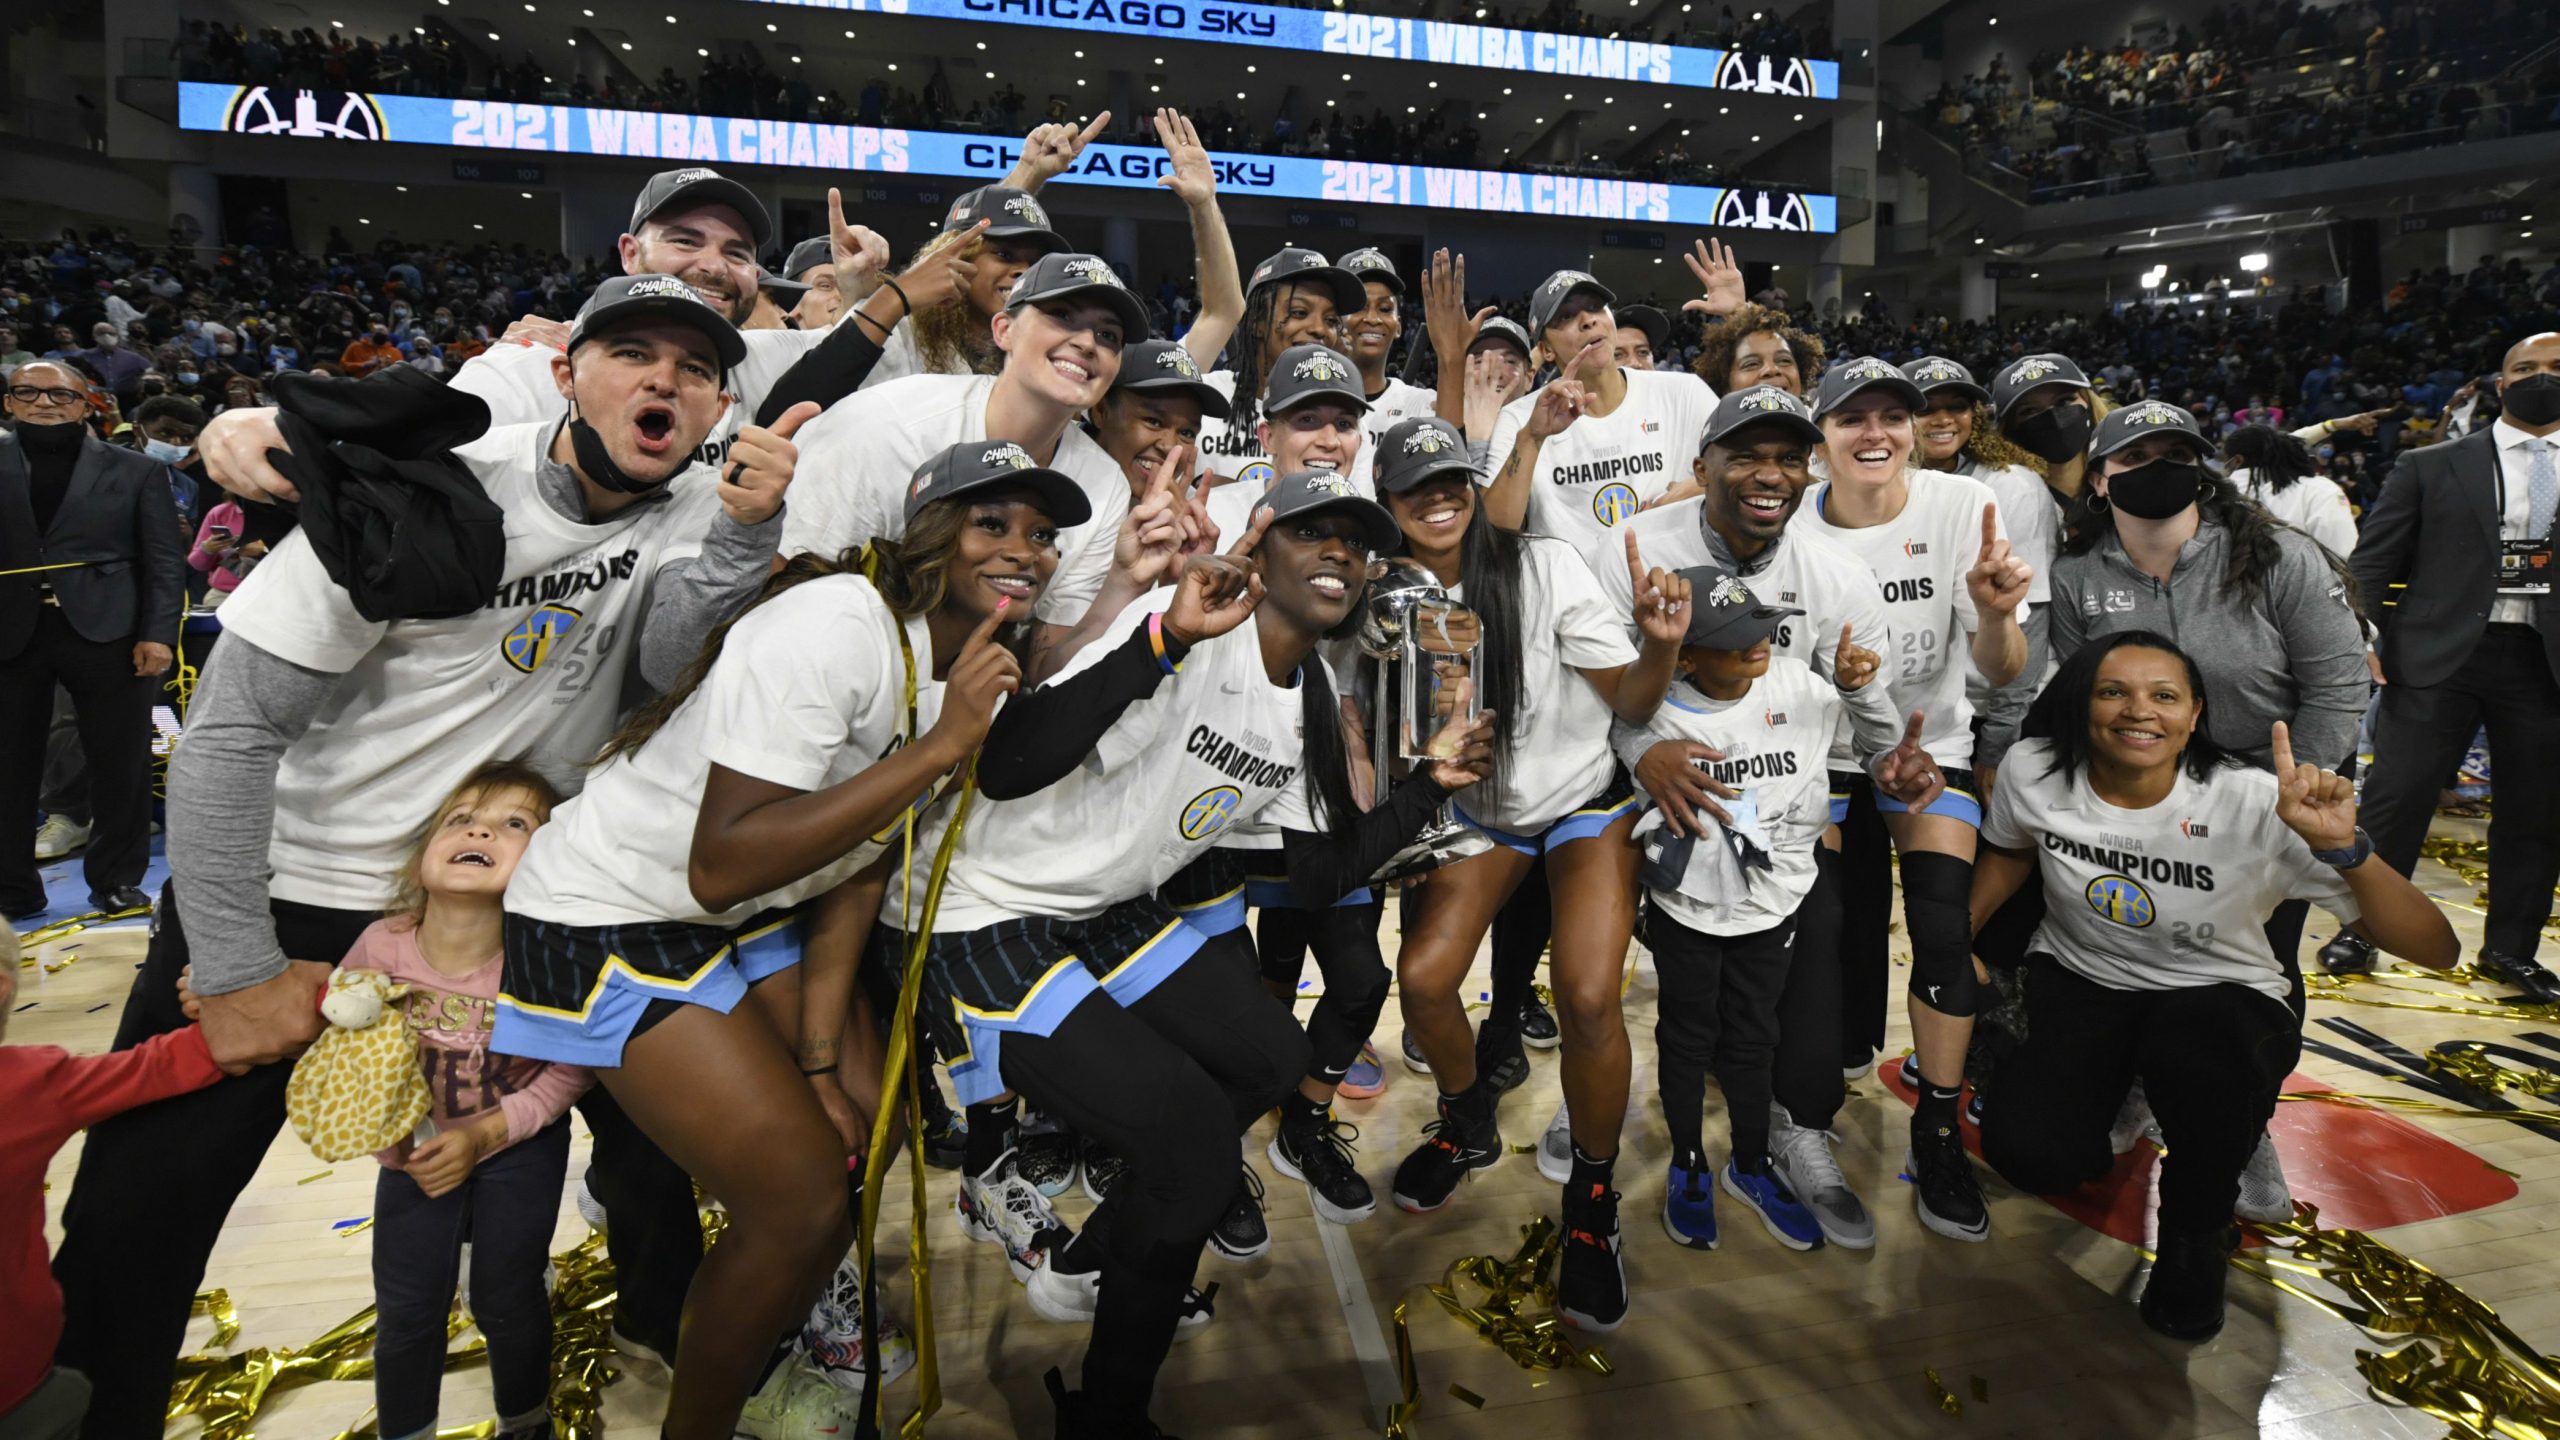 Chicago Sky wins 1st WNBA championship